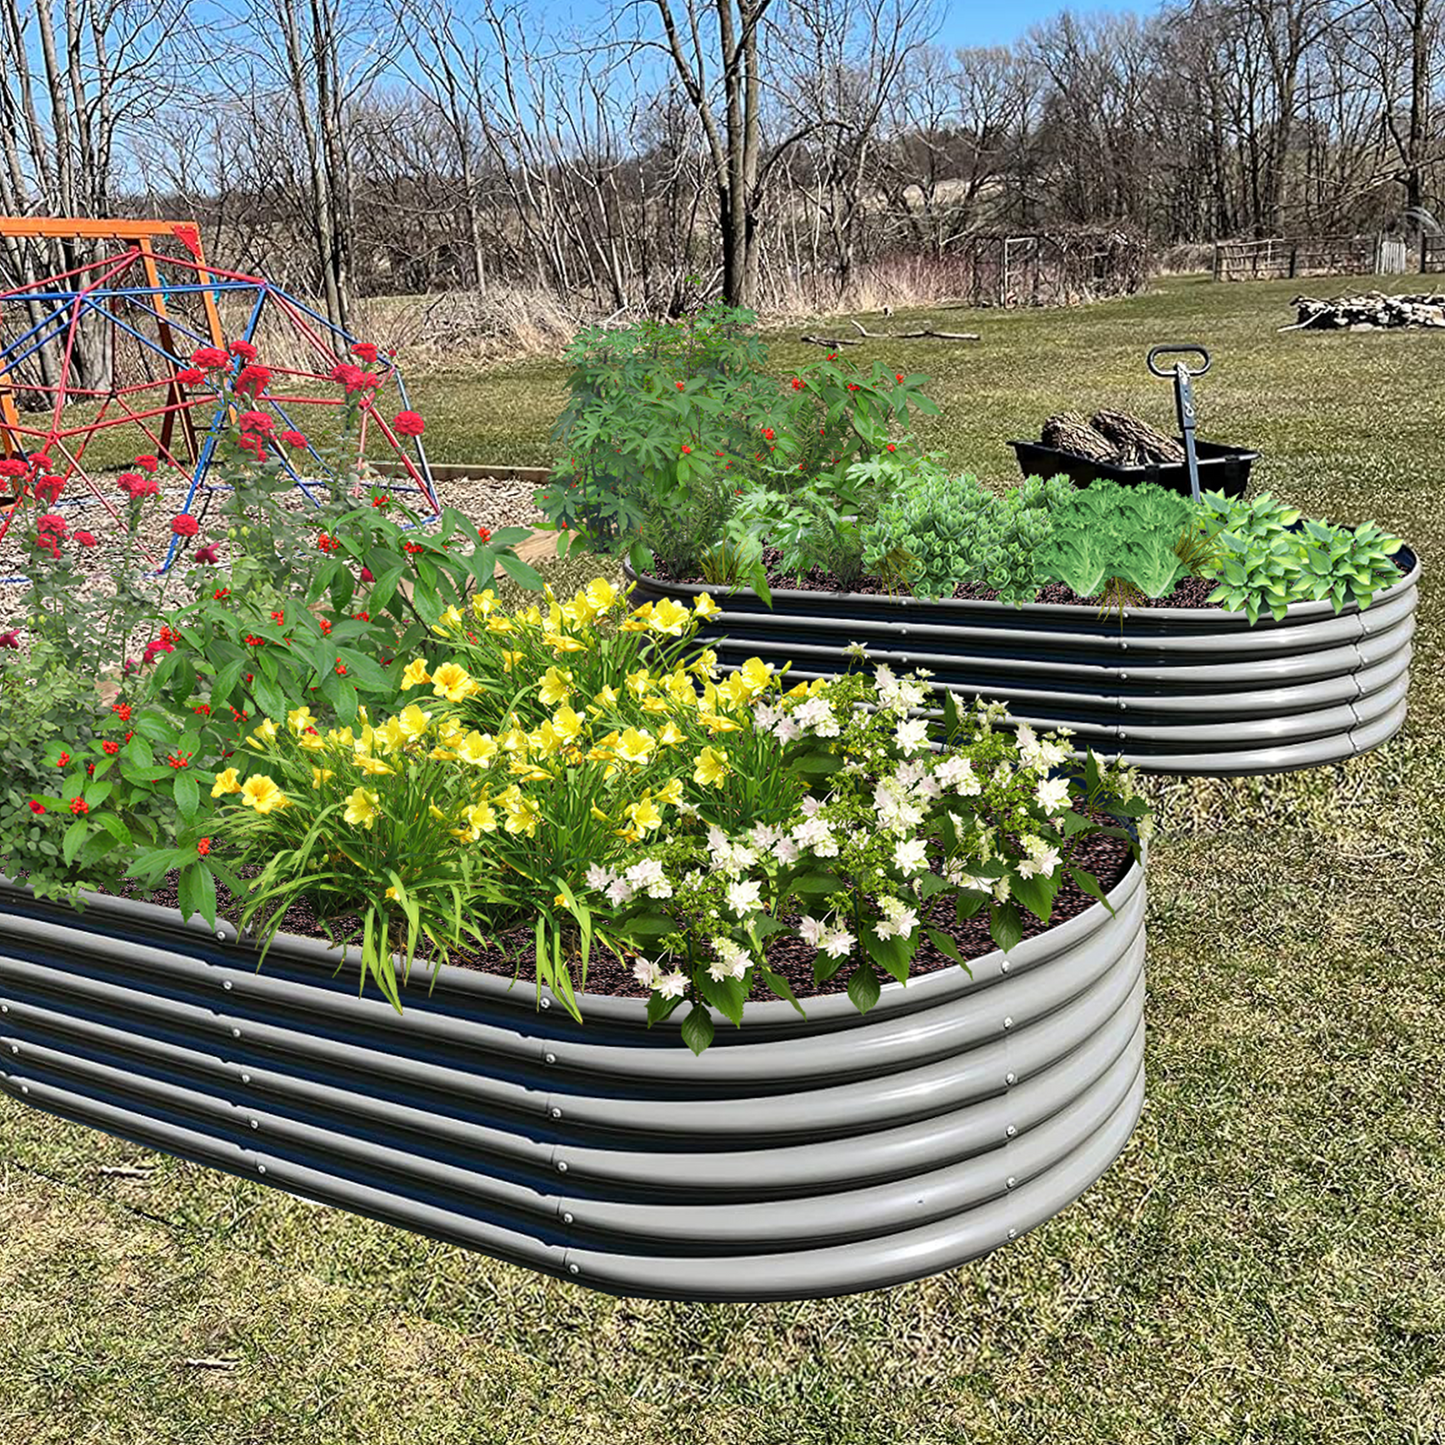 Set of 6：6x2x1.5ft Oval Metal Raised Modular Garden Bed (Grey)